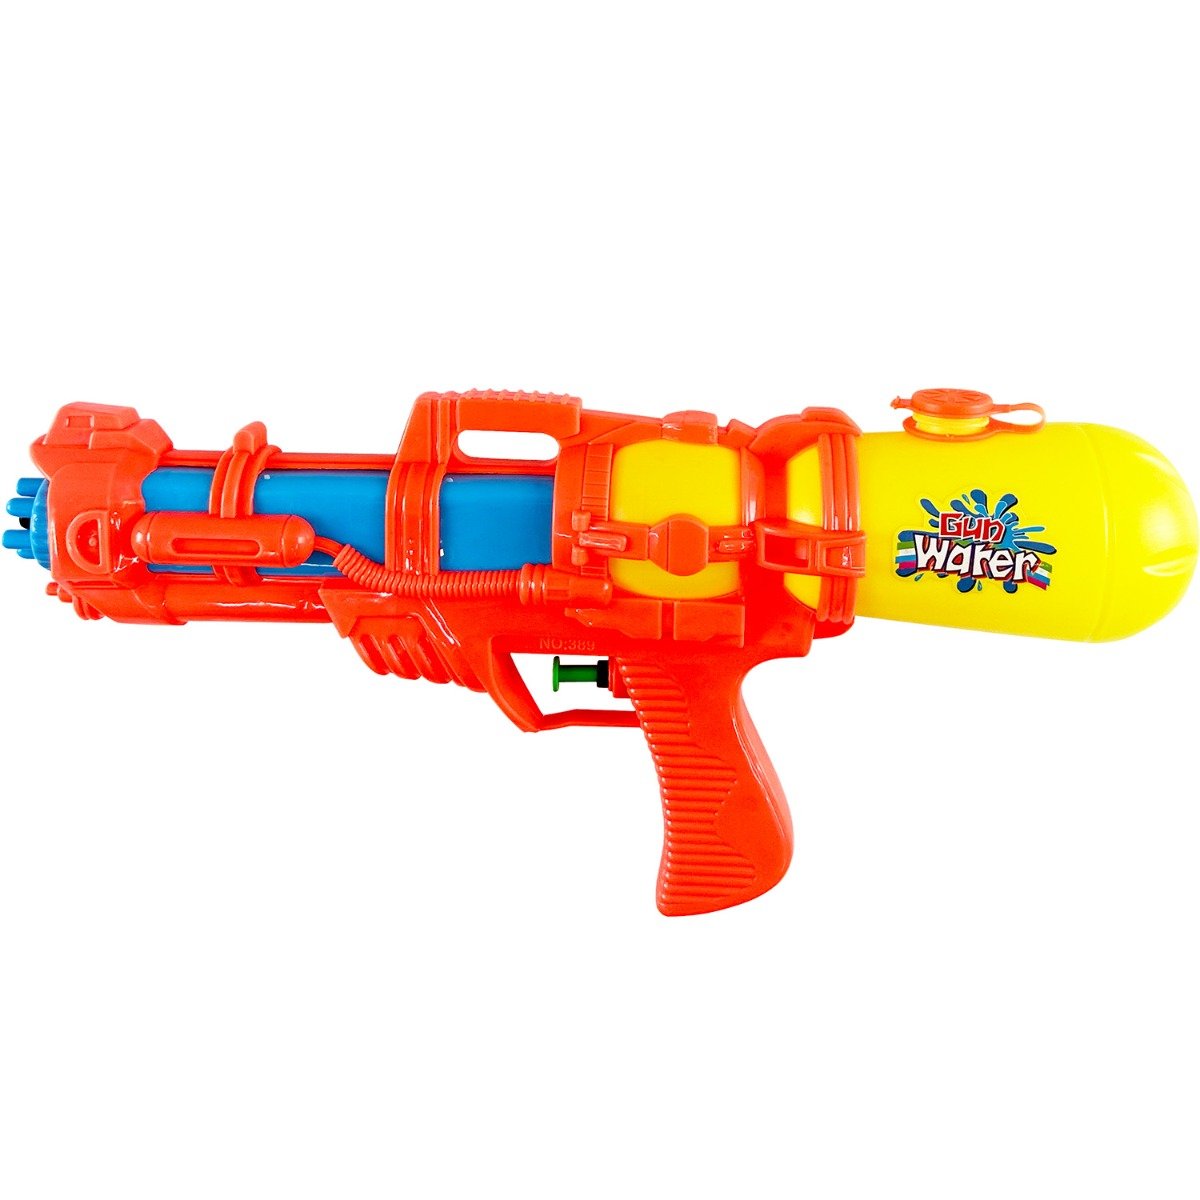 Pistol cu apa, Zapp Toys Swoosh, 37 cm, Galben aer